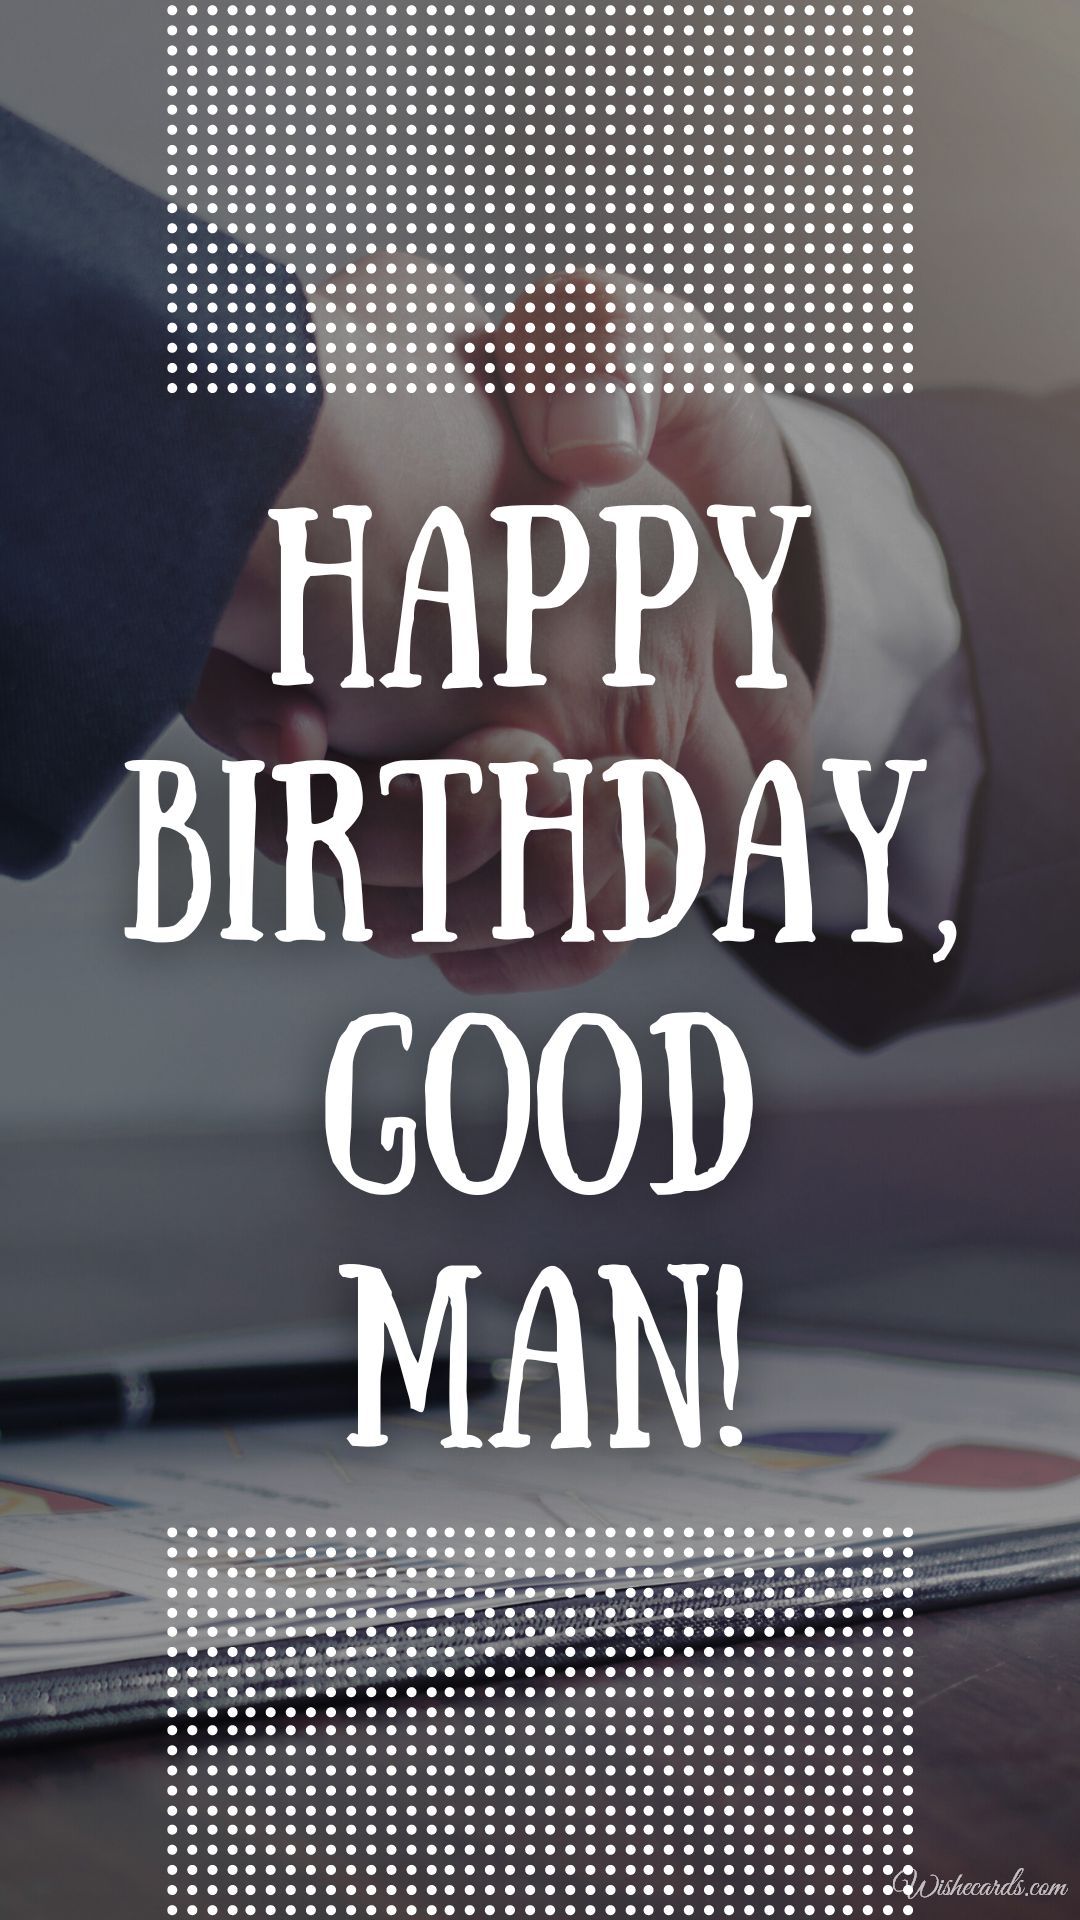 Happy Birthday Good Man